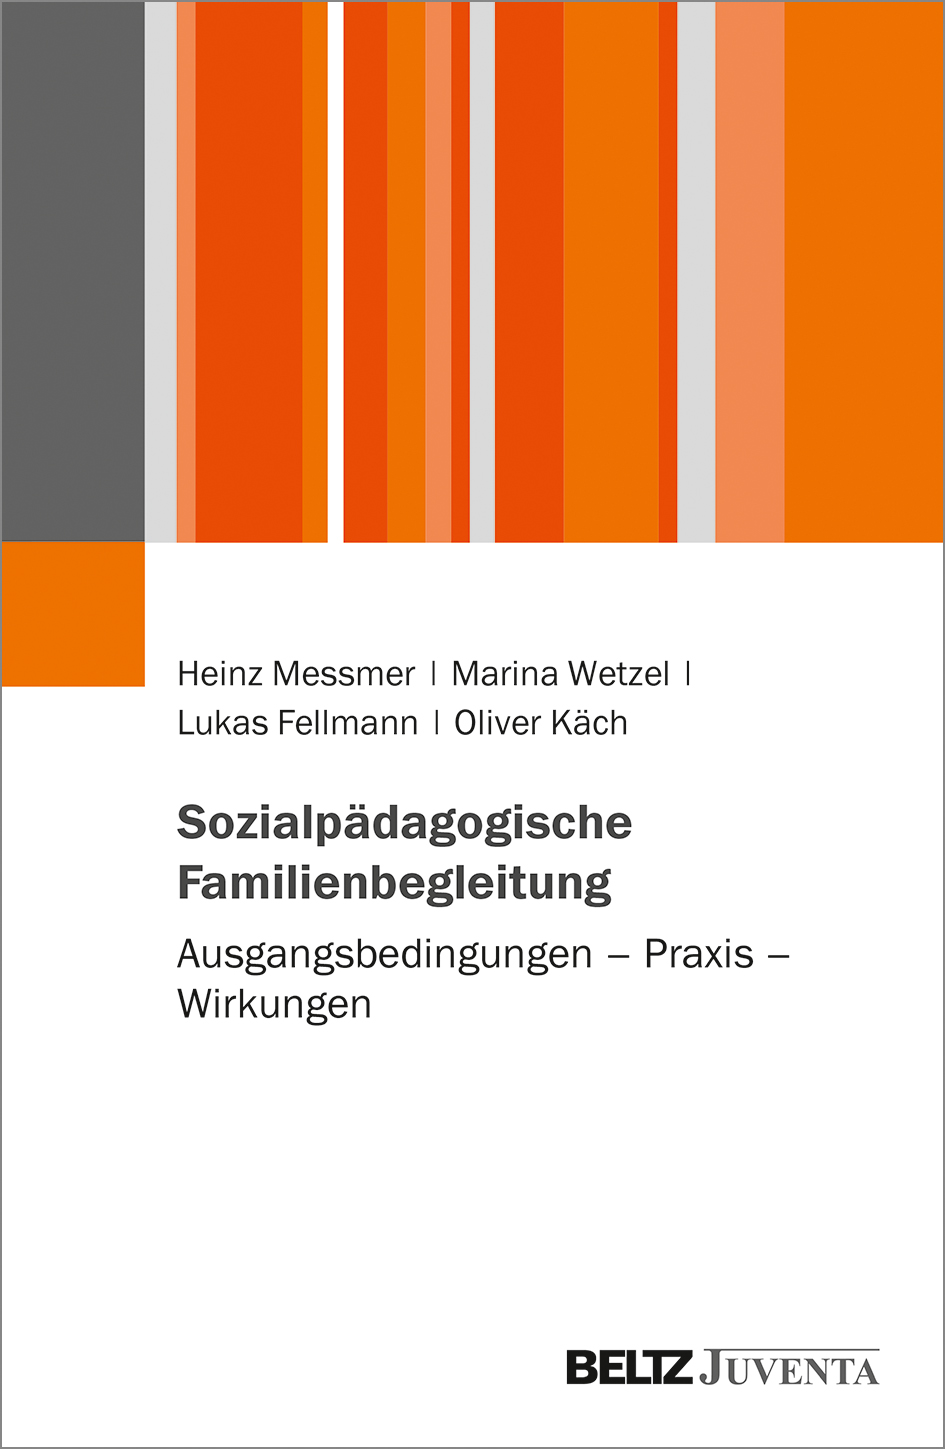 Cover des Buches "Sozialpädagogische Familienbegleitung"